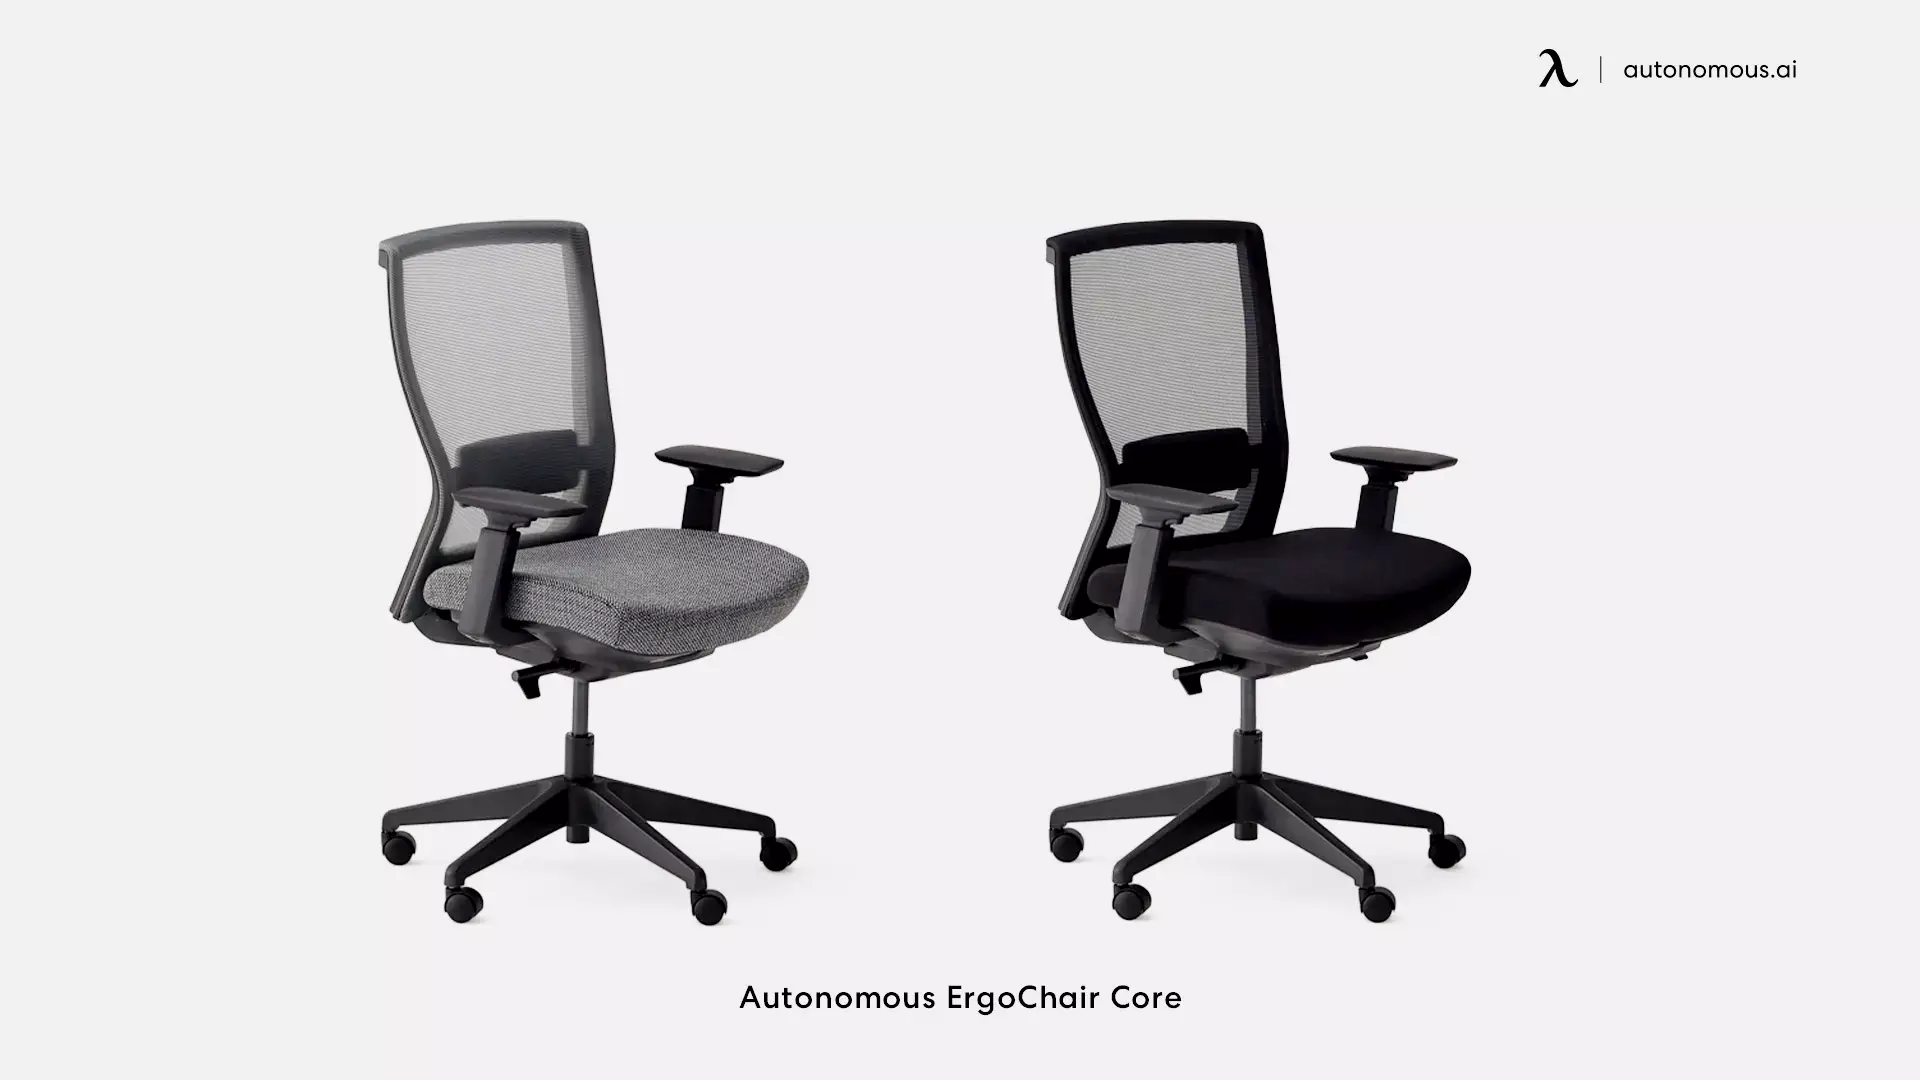 Autonomous ErgoChair Core swivel office chair